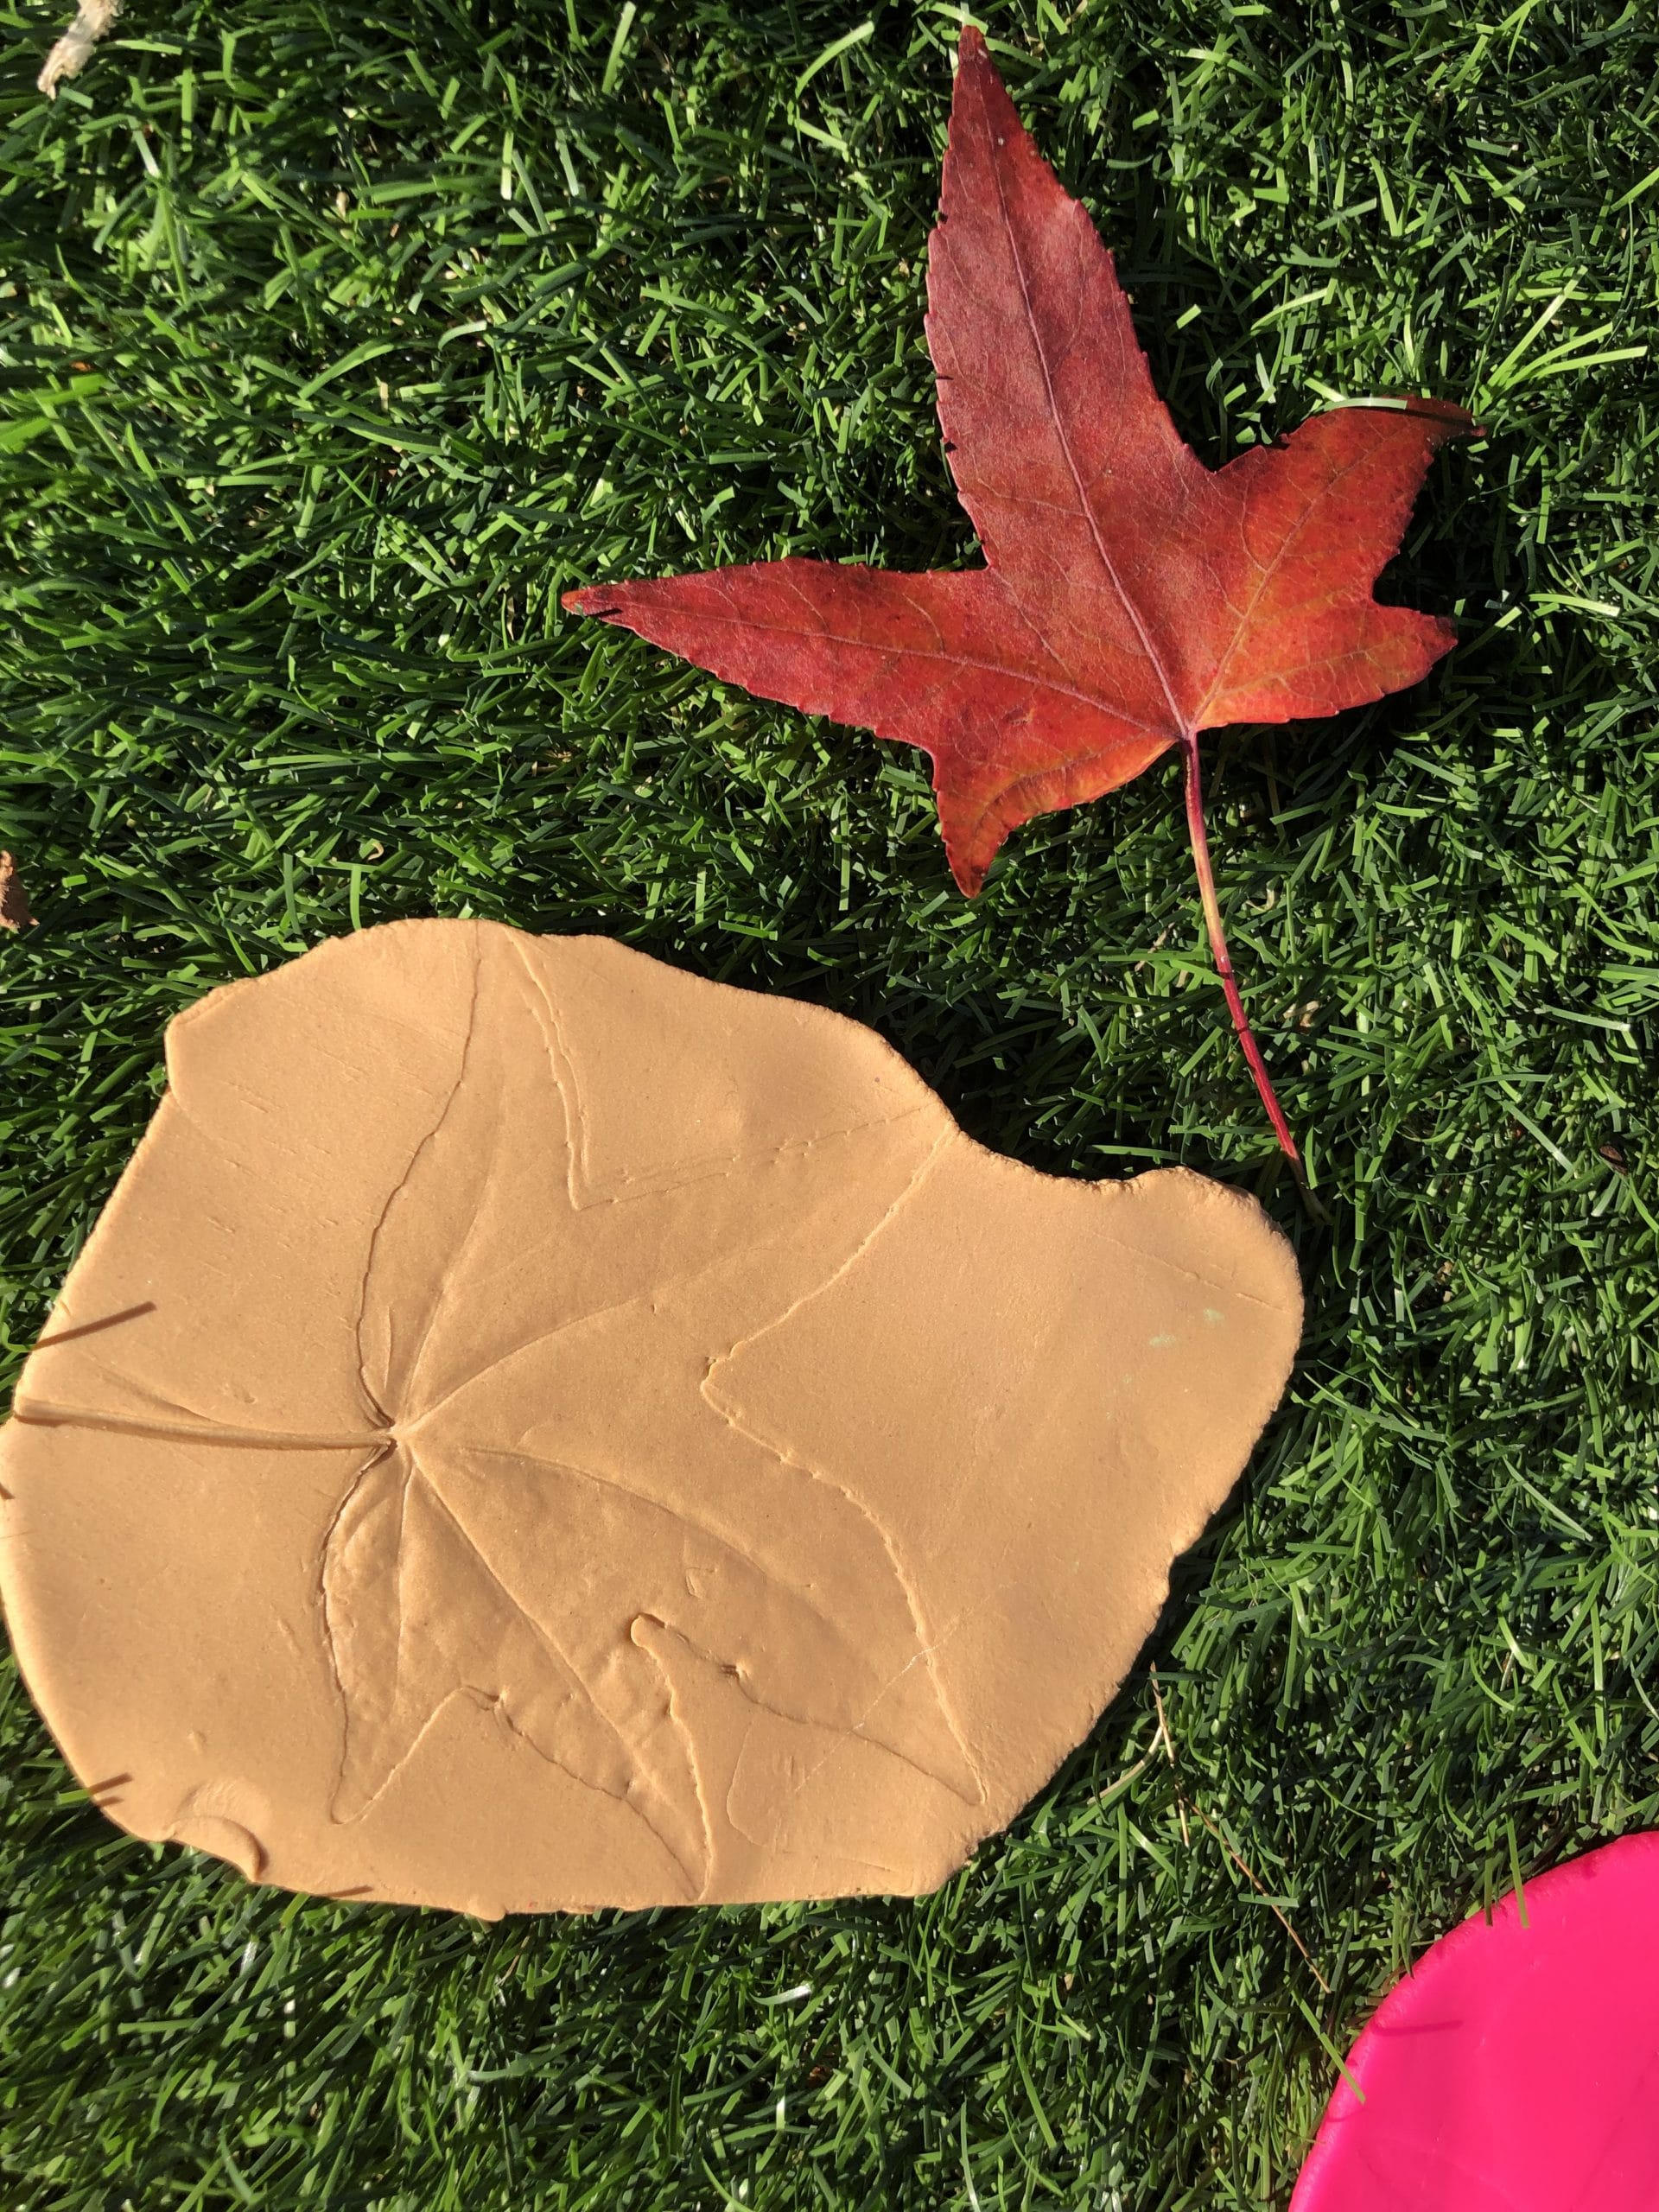 Orange play dough with a leaf imprint